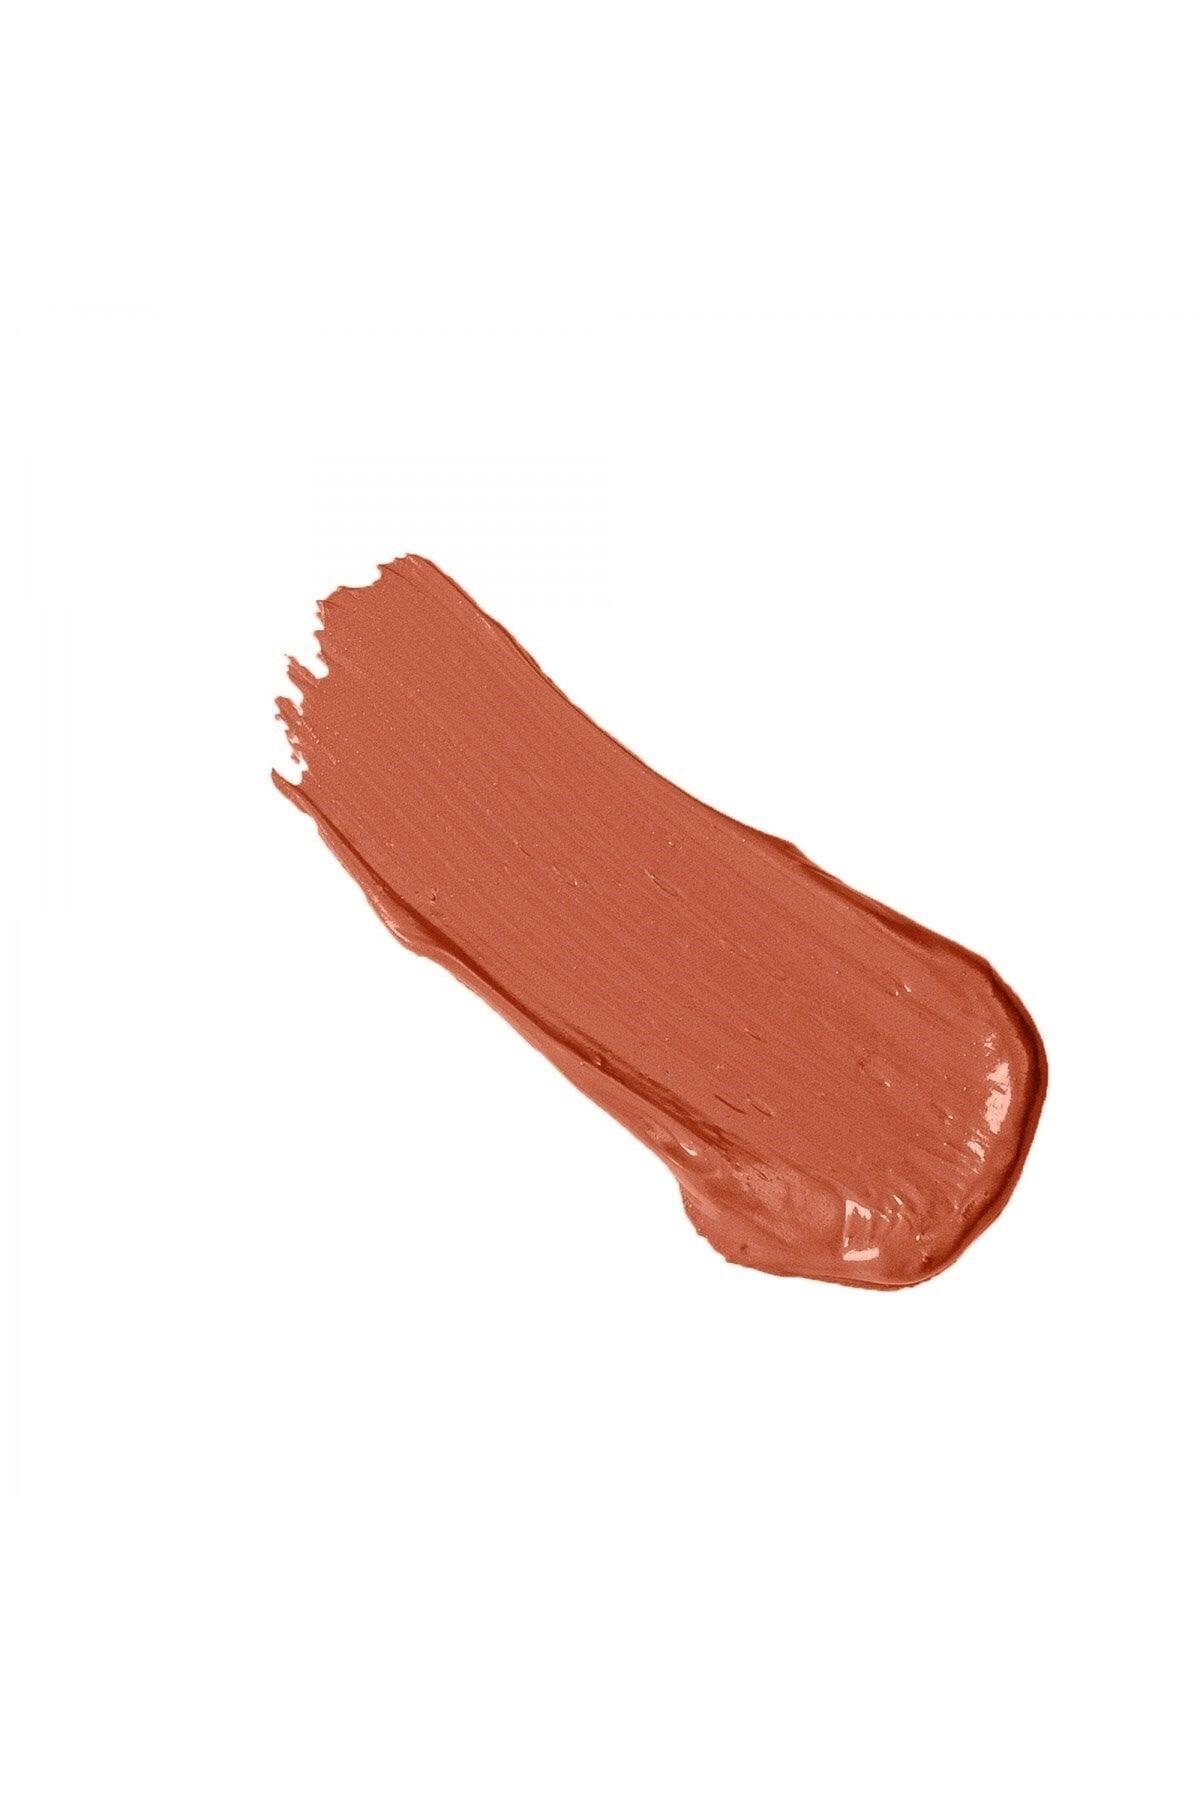 Mattever Liquid Lipstick Matte and Permanent 04 Peach Rose